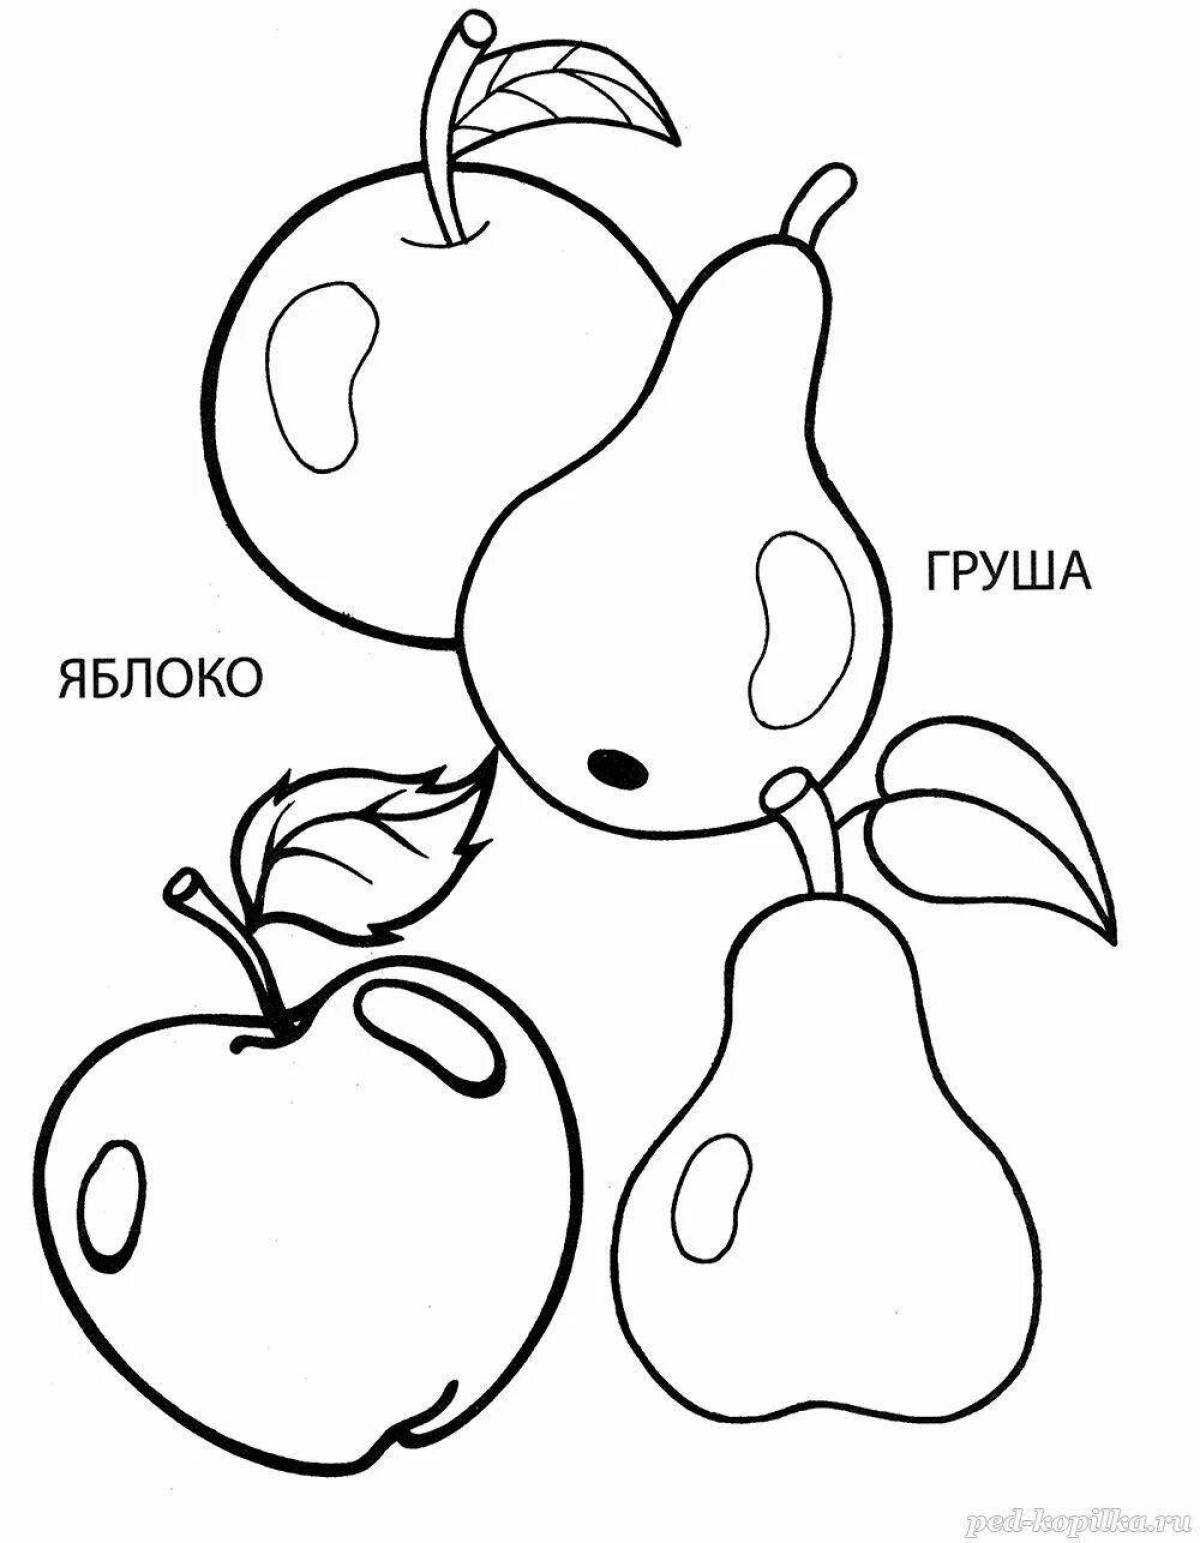 Grand pear tree coloring book